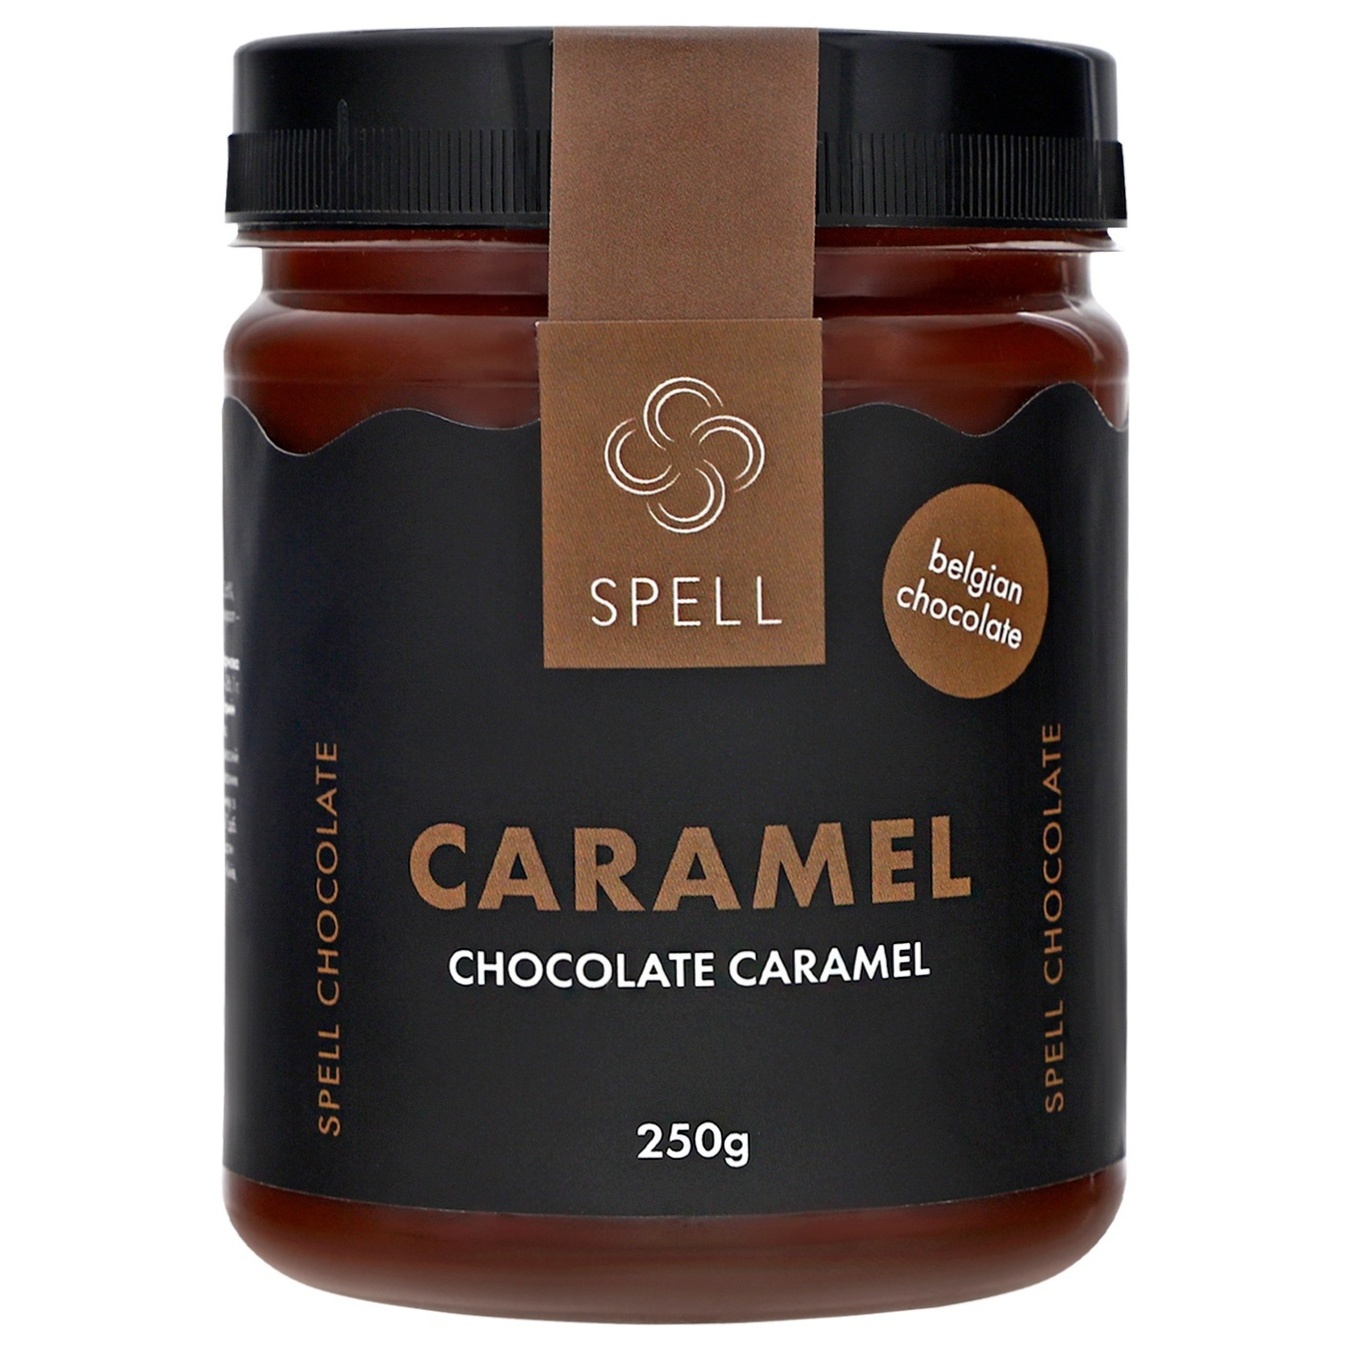 Spell chocolate caramel 250g